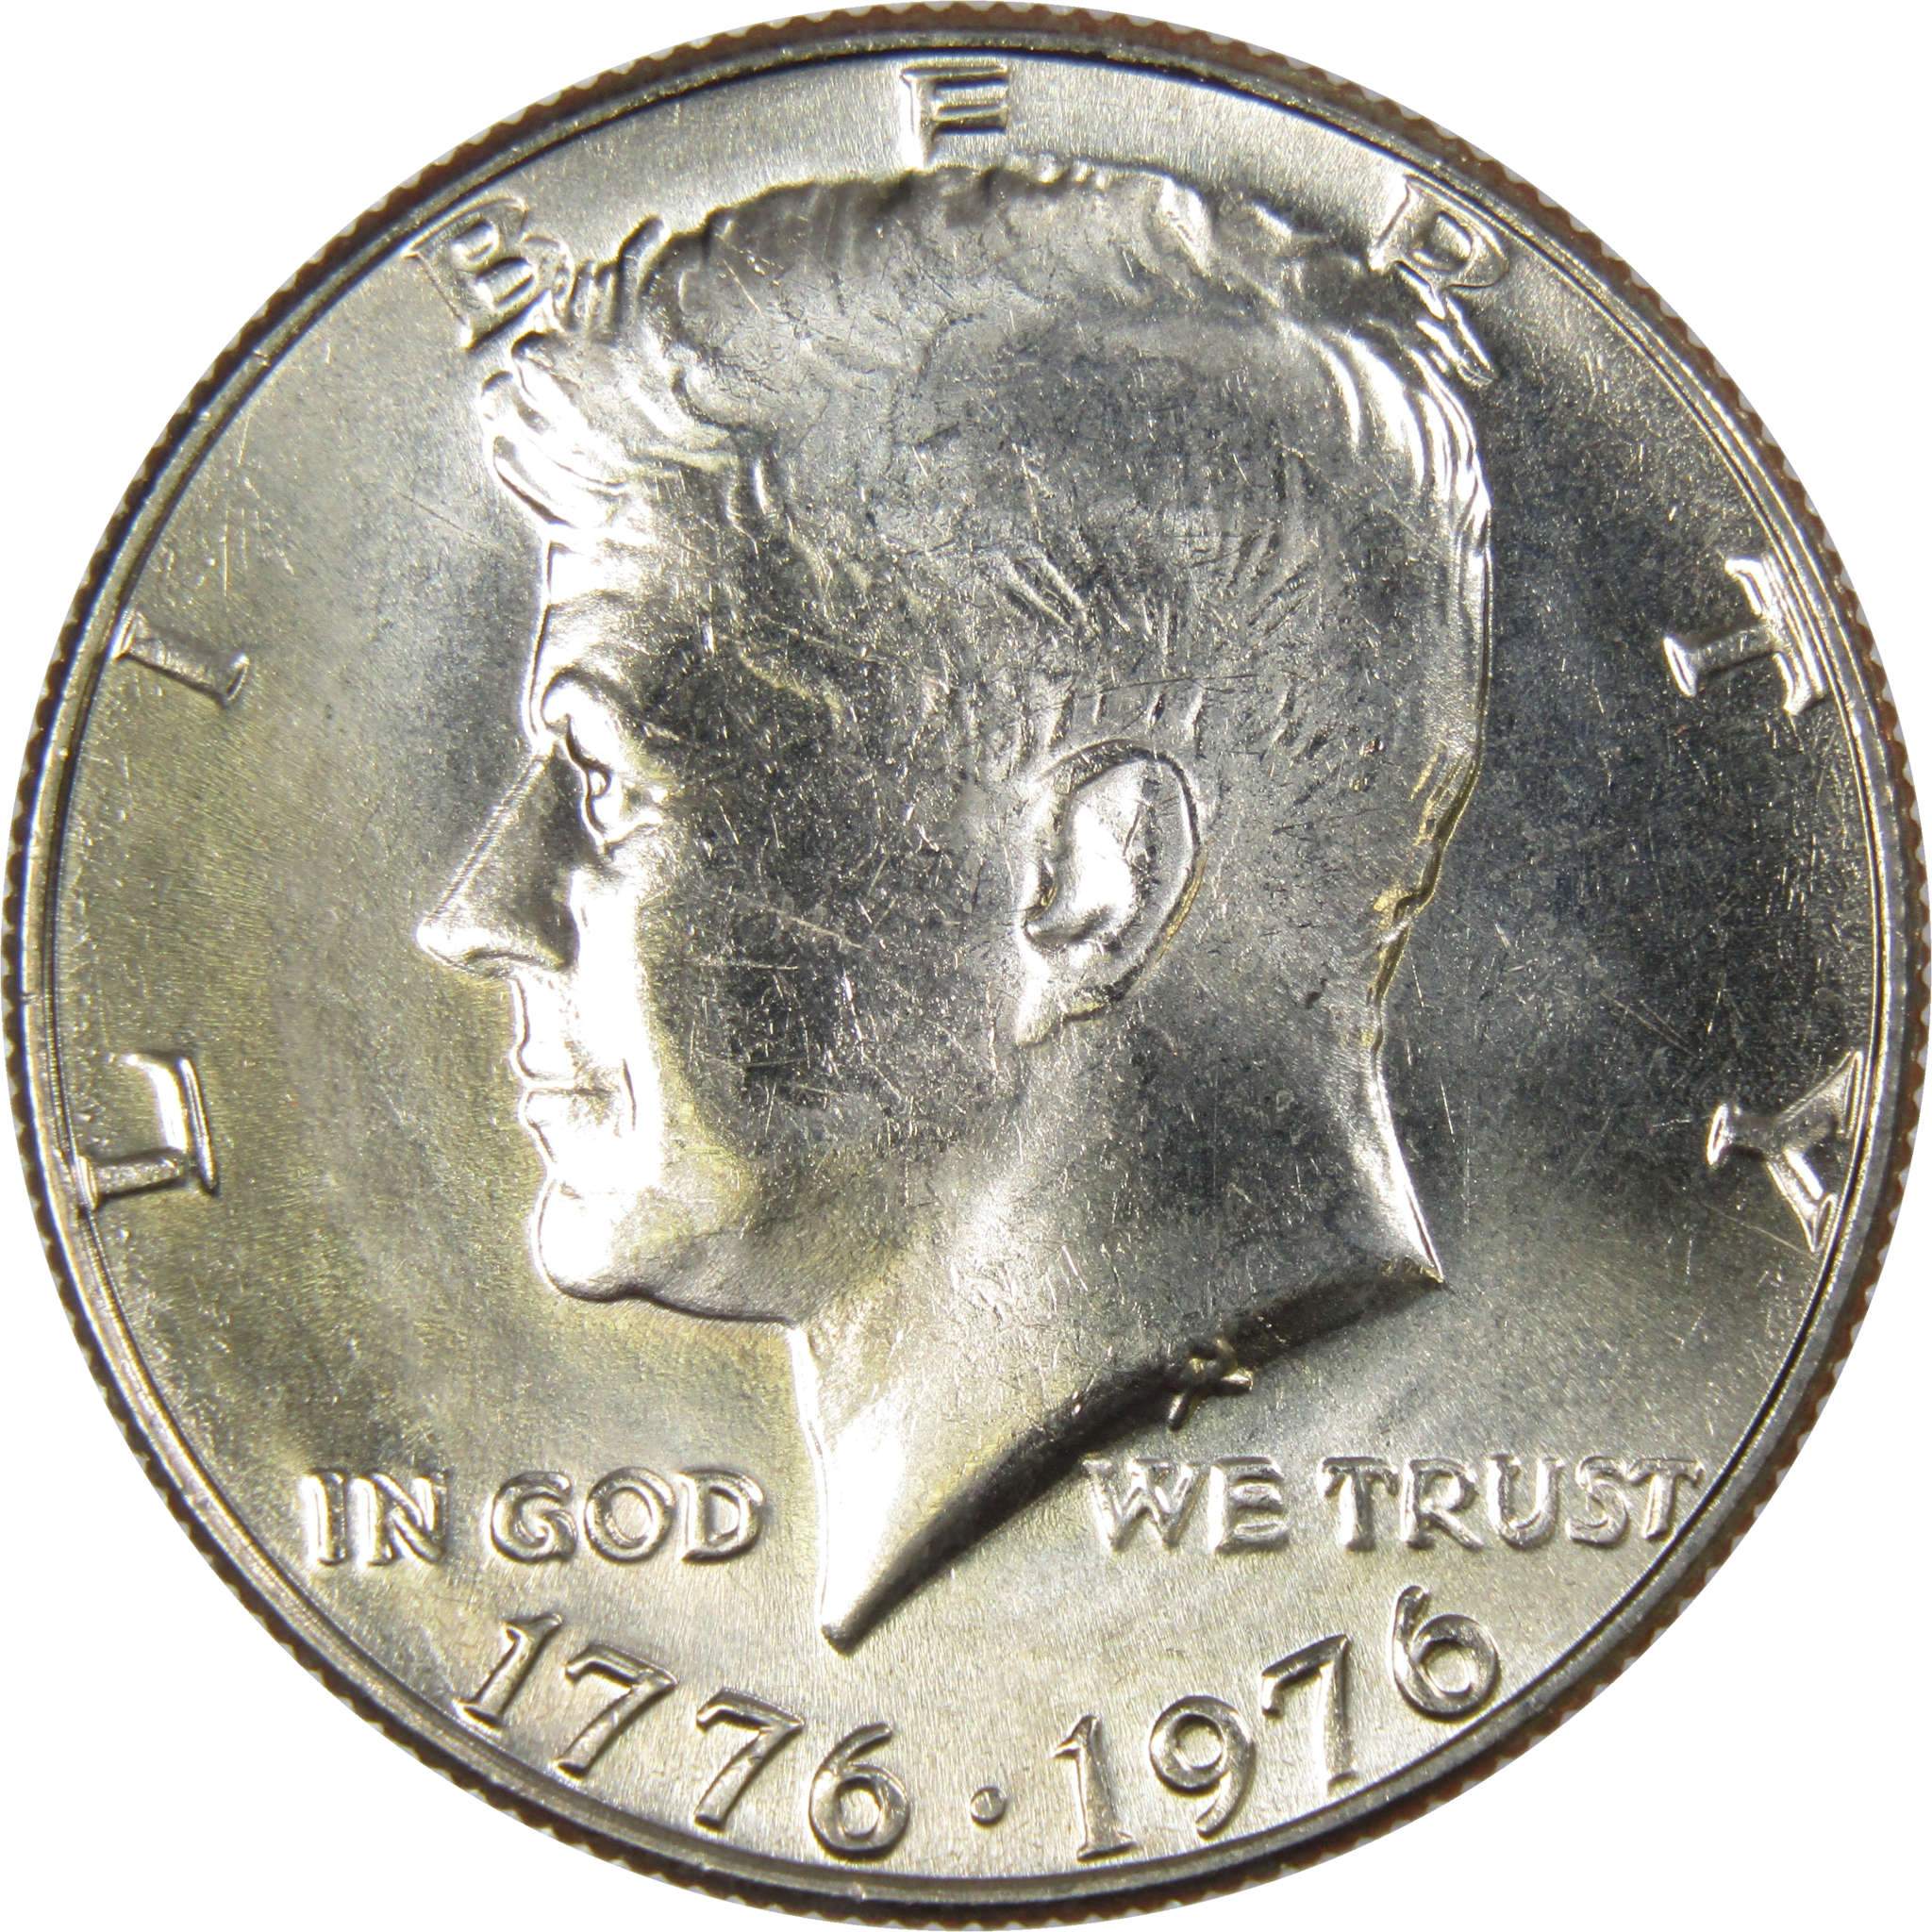 1976 Kennedy Bicentennial Half Dollar BU Uncirculated Mint State 50c US Coin